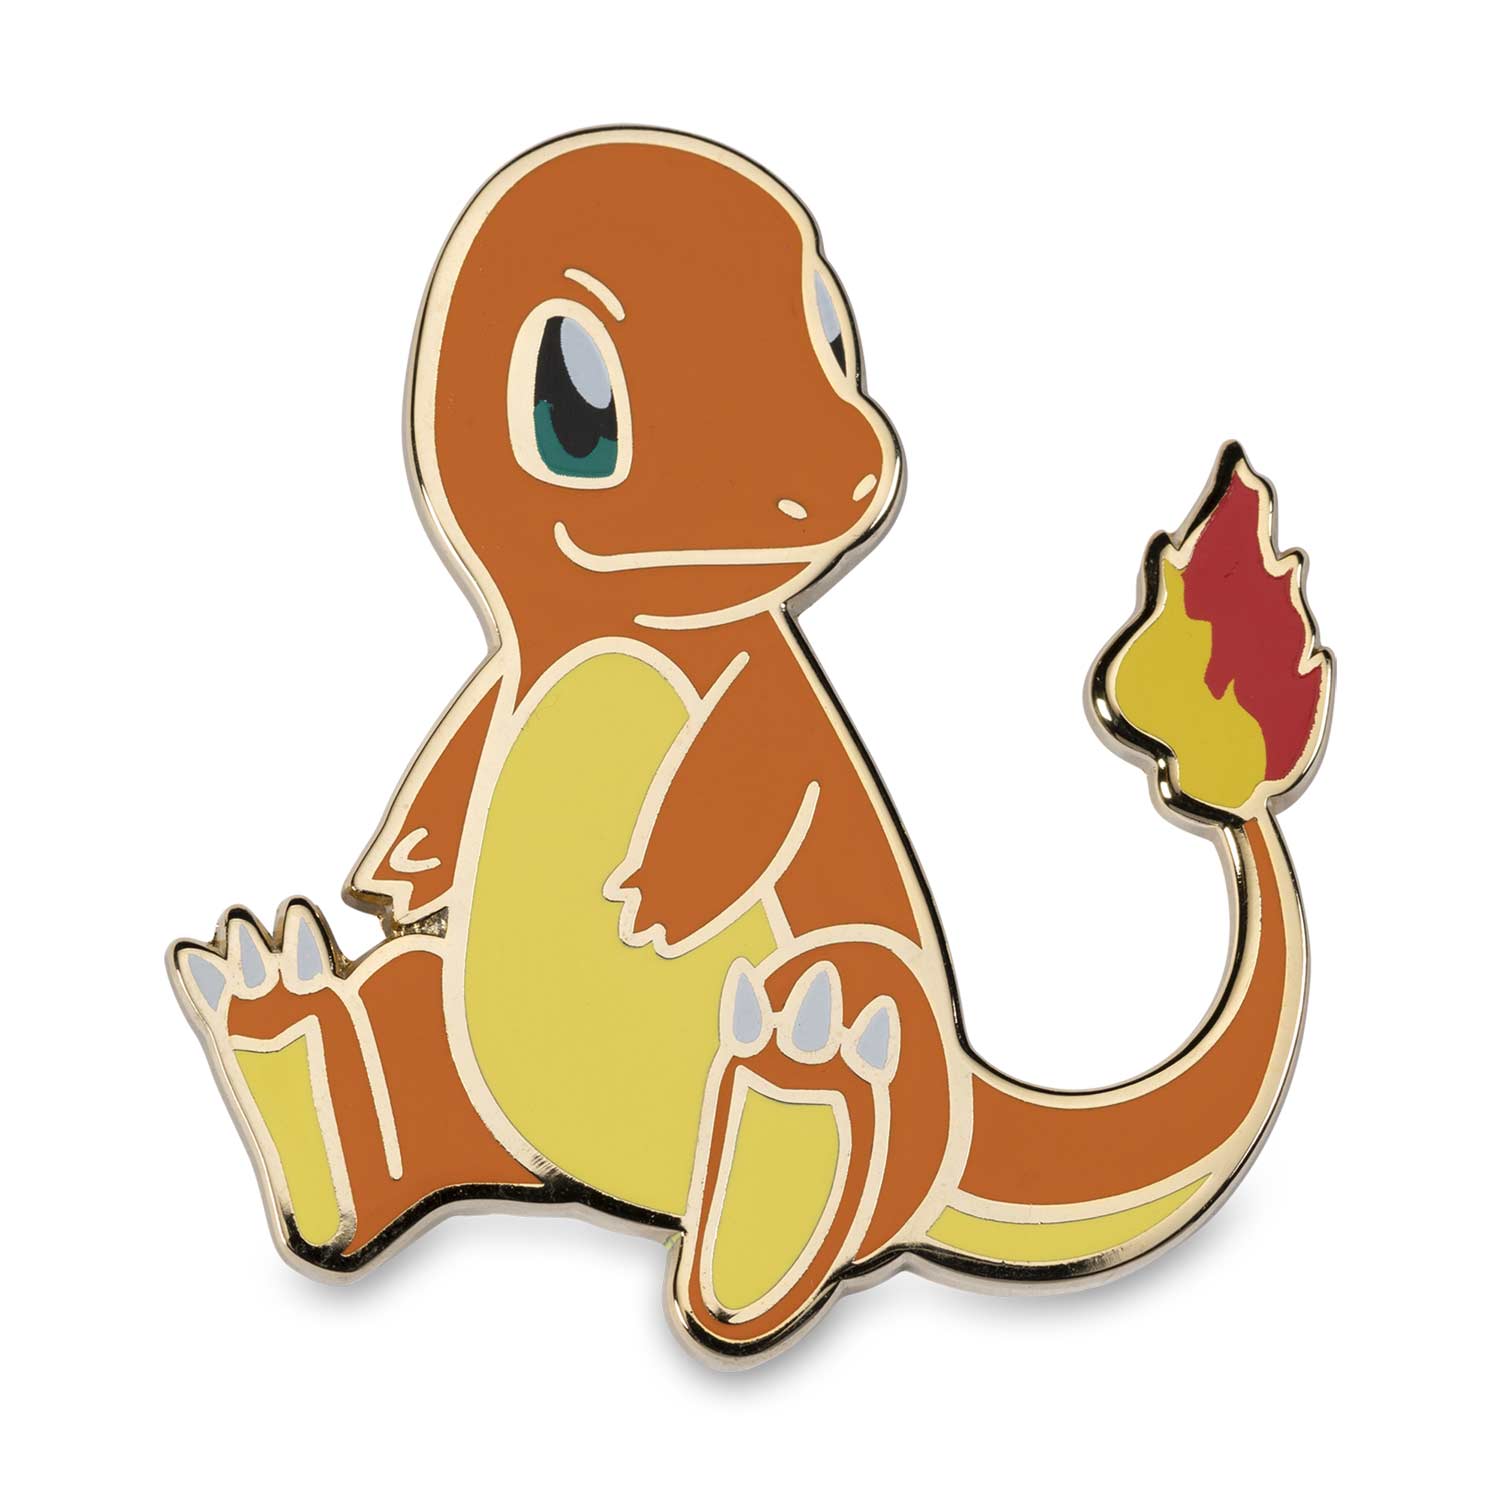 Bulbasaur & Charmander Pokémon Pins (2-Pack) | Pokémon ...
